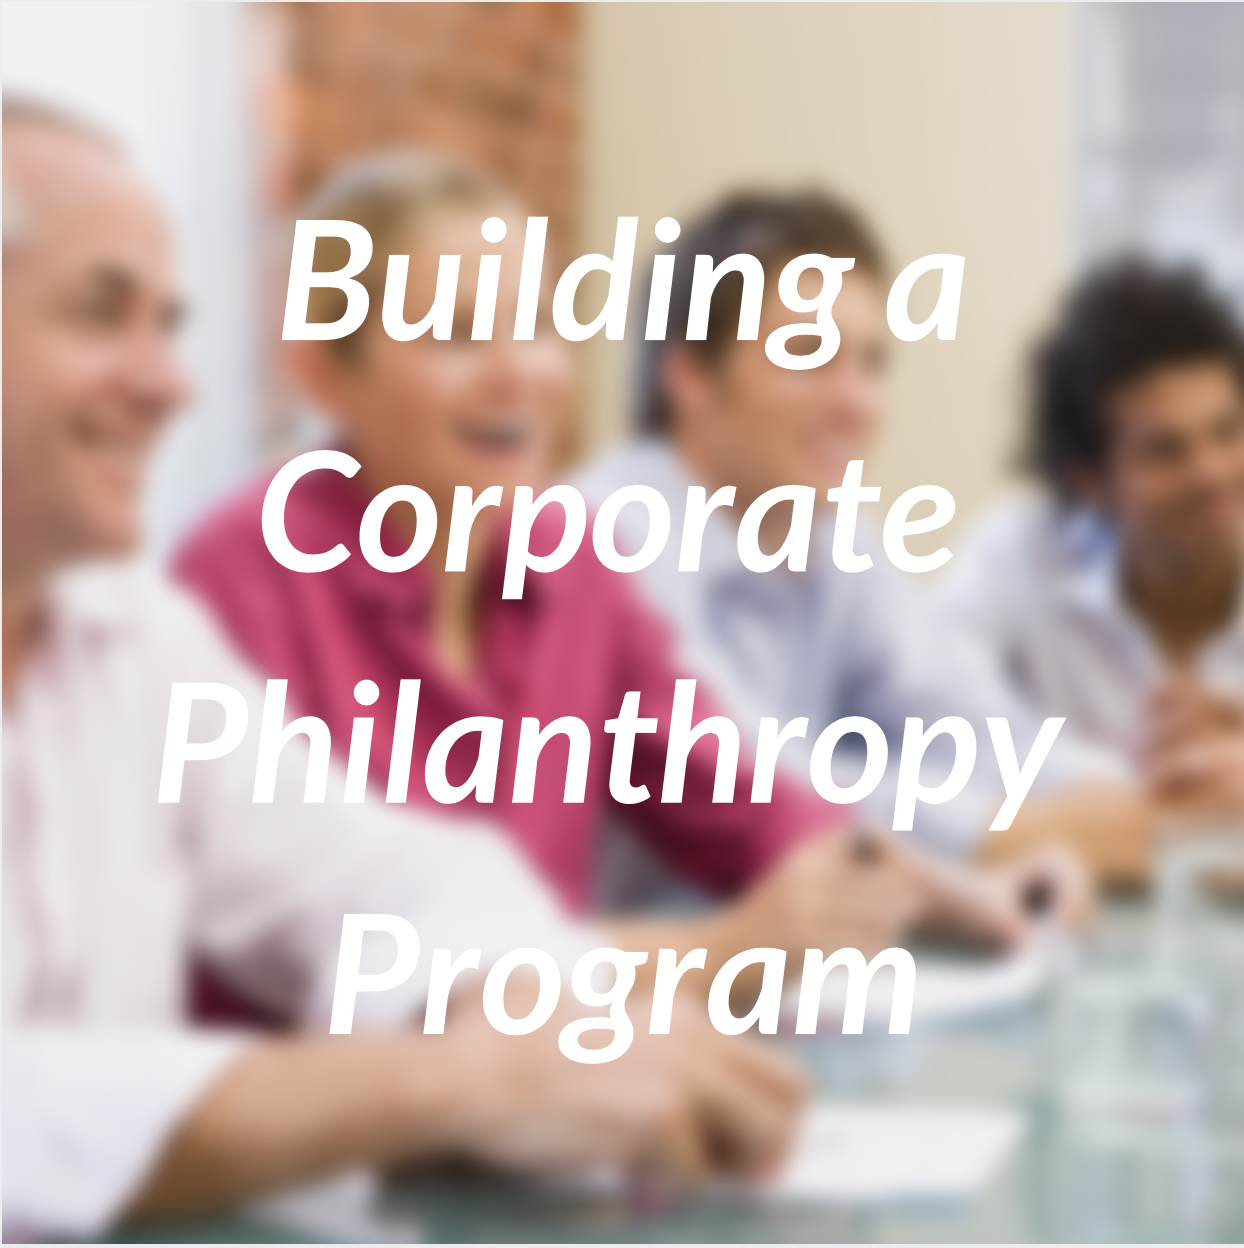 Building a Corporate Philanthropy Program